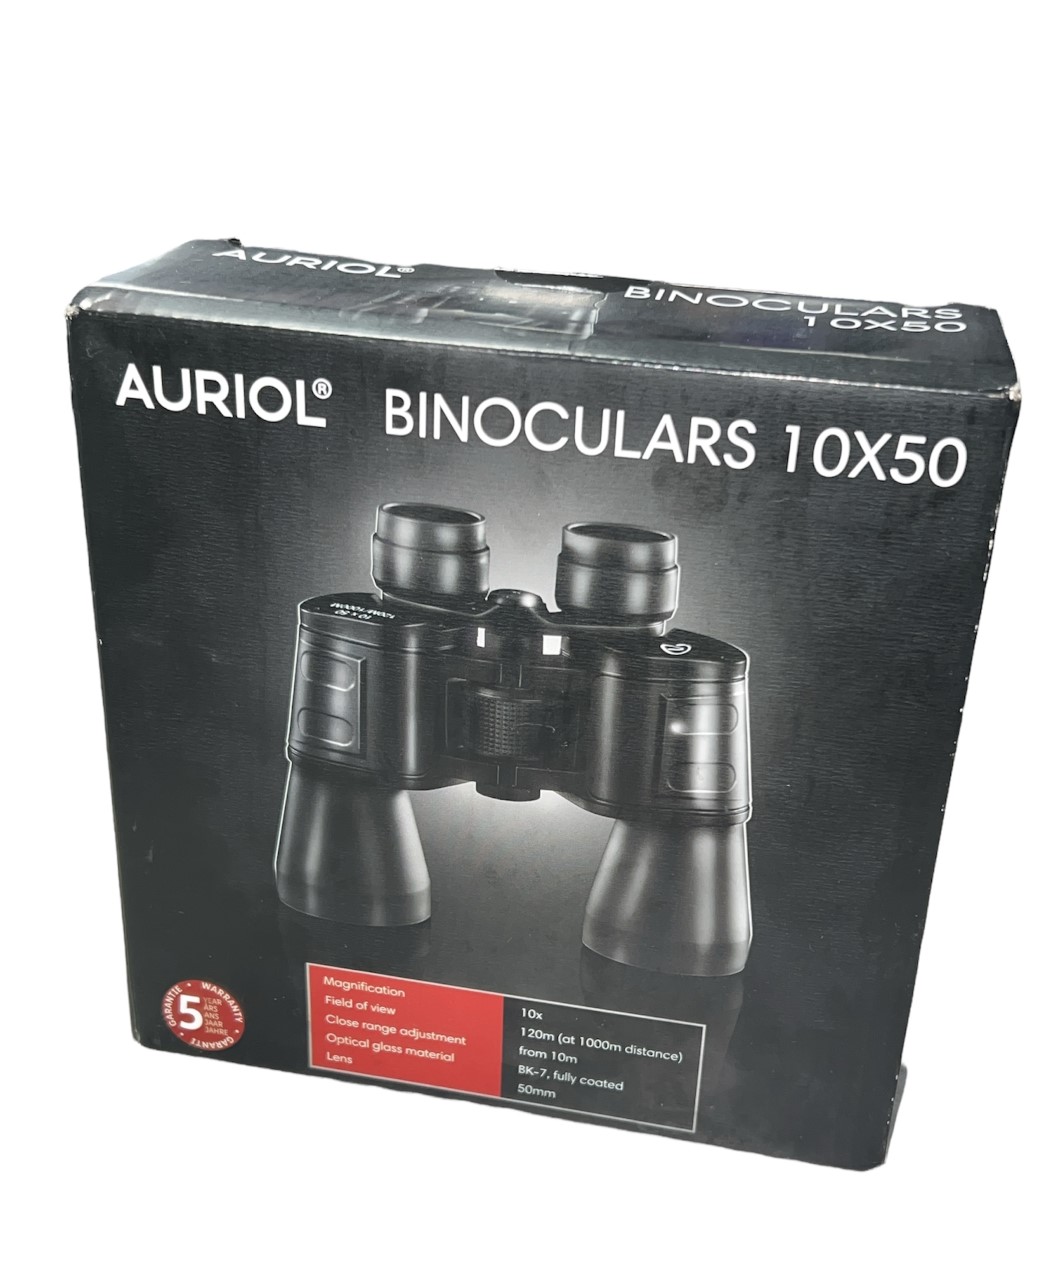 Auriol Binoculars 10x50 Boxed As New